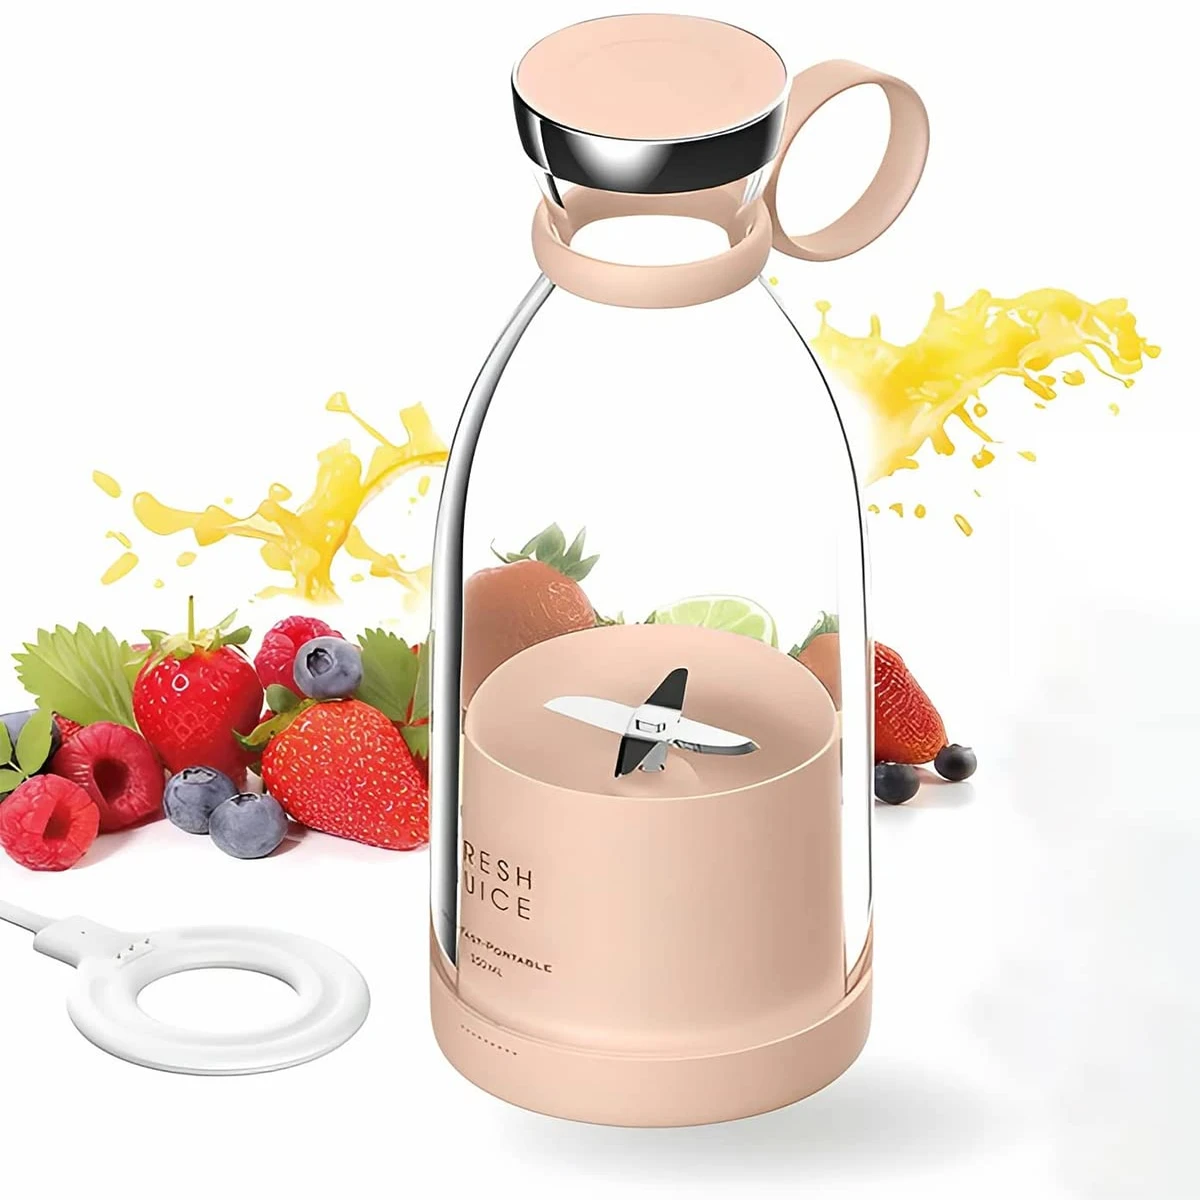 Buy Portable Blender To Make Fresh Juice